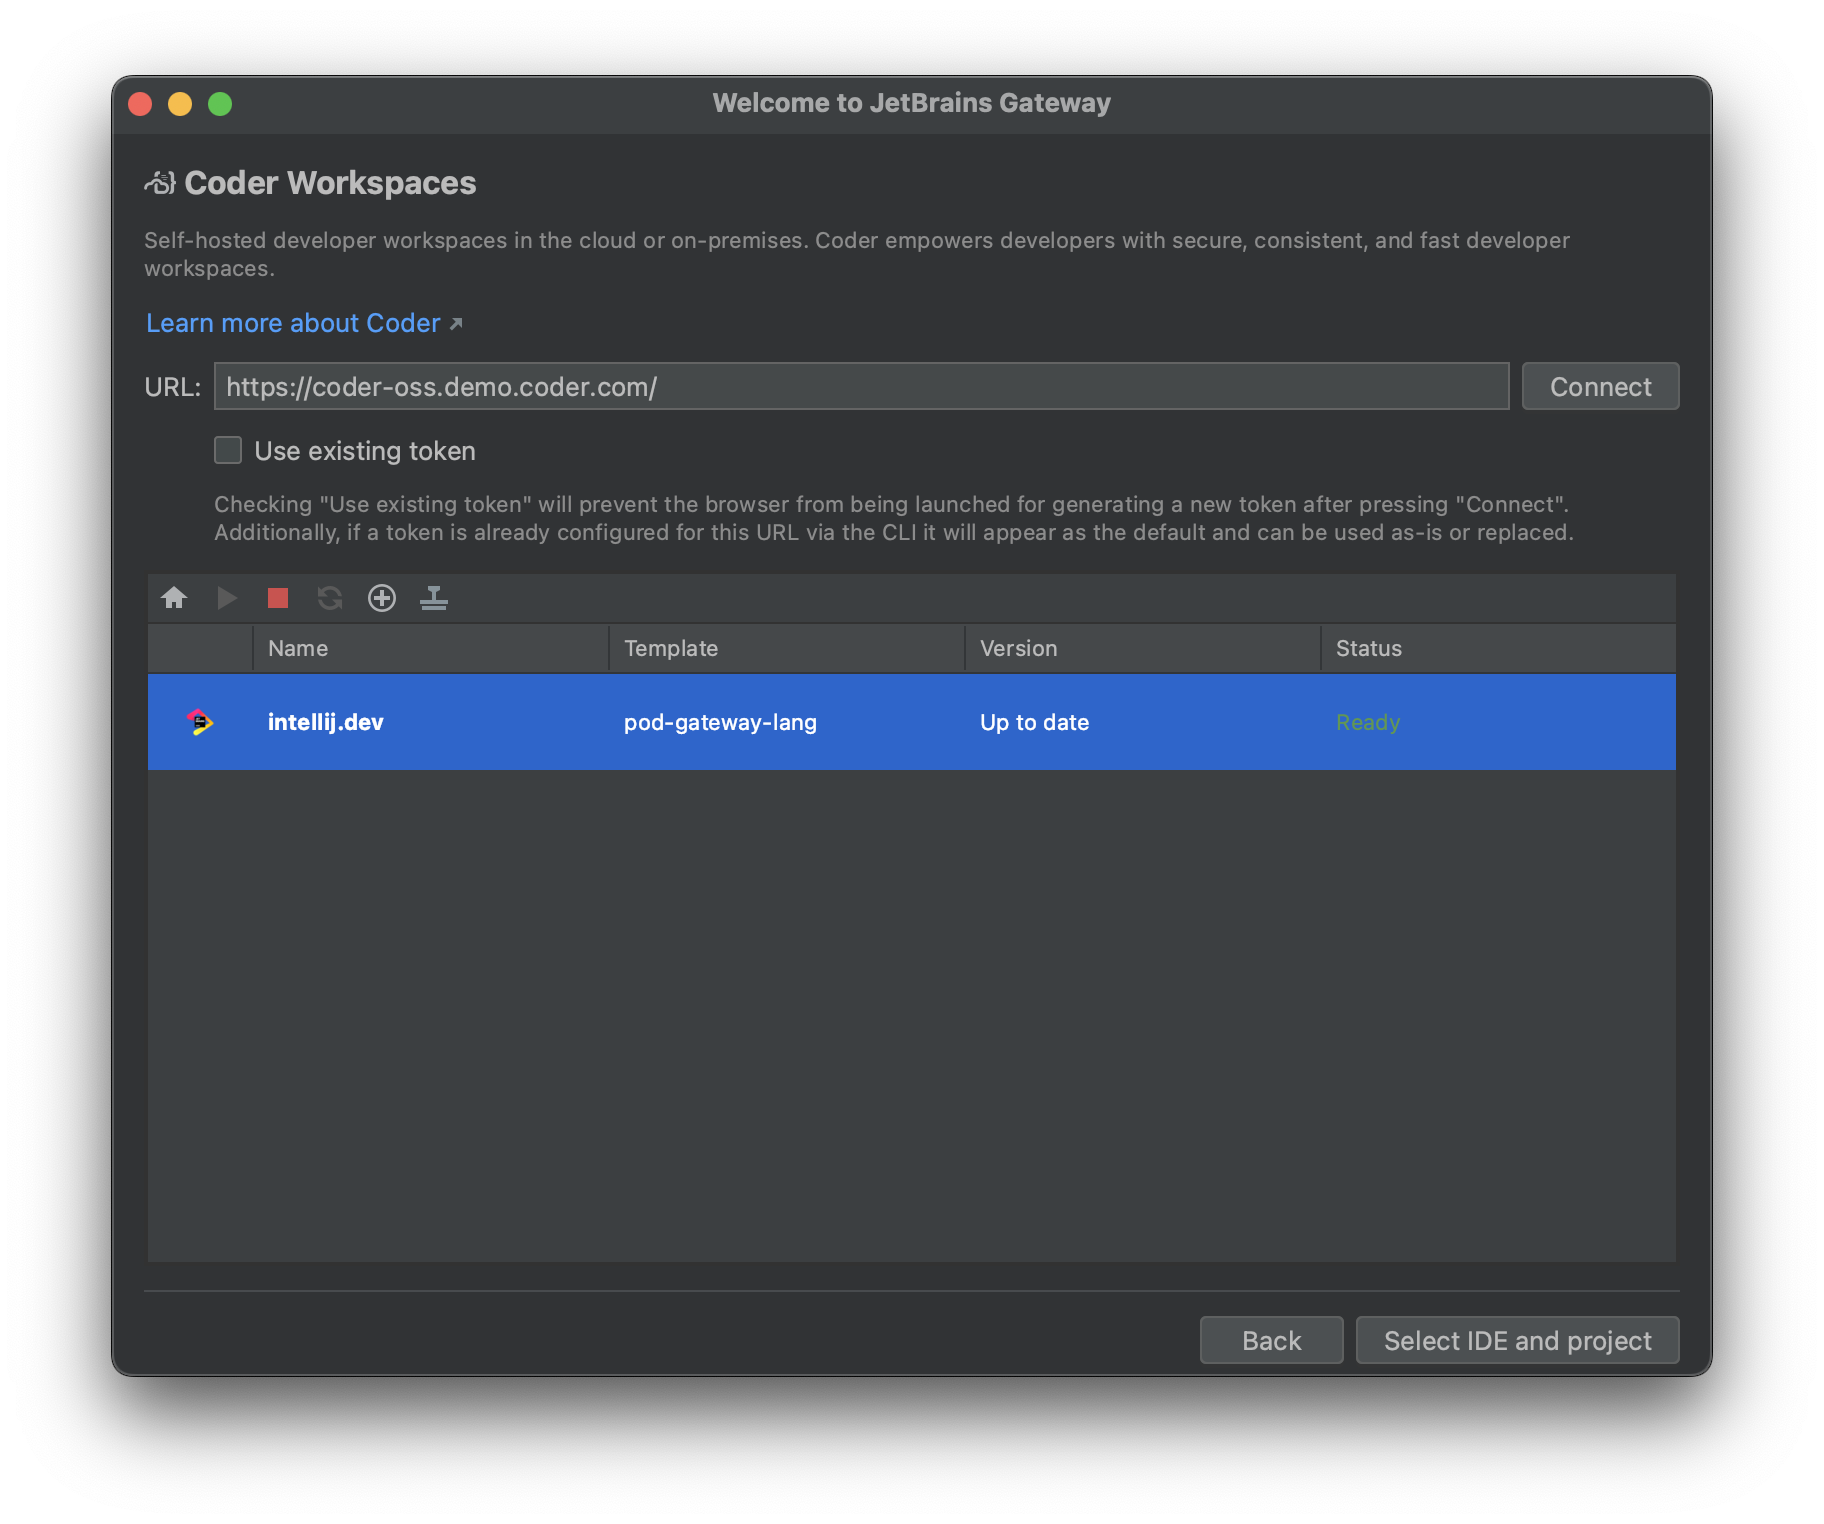 JetBrains Gateway using the Coder integration to list a remote development environment